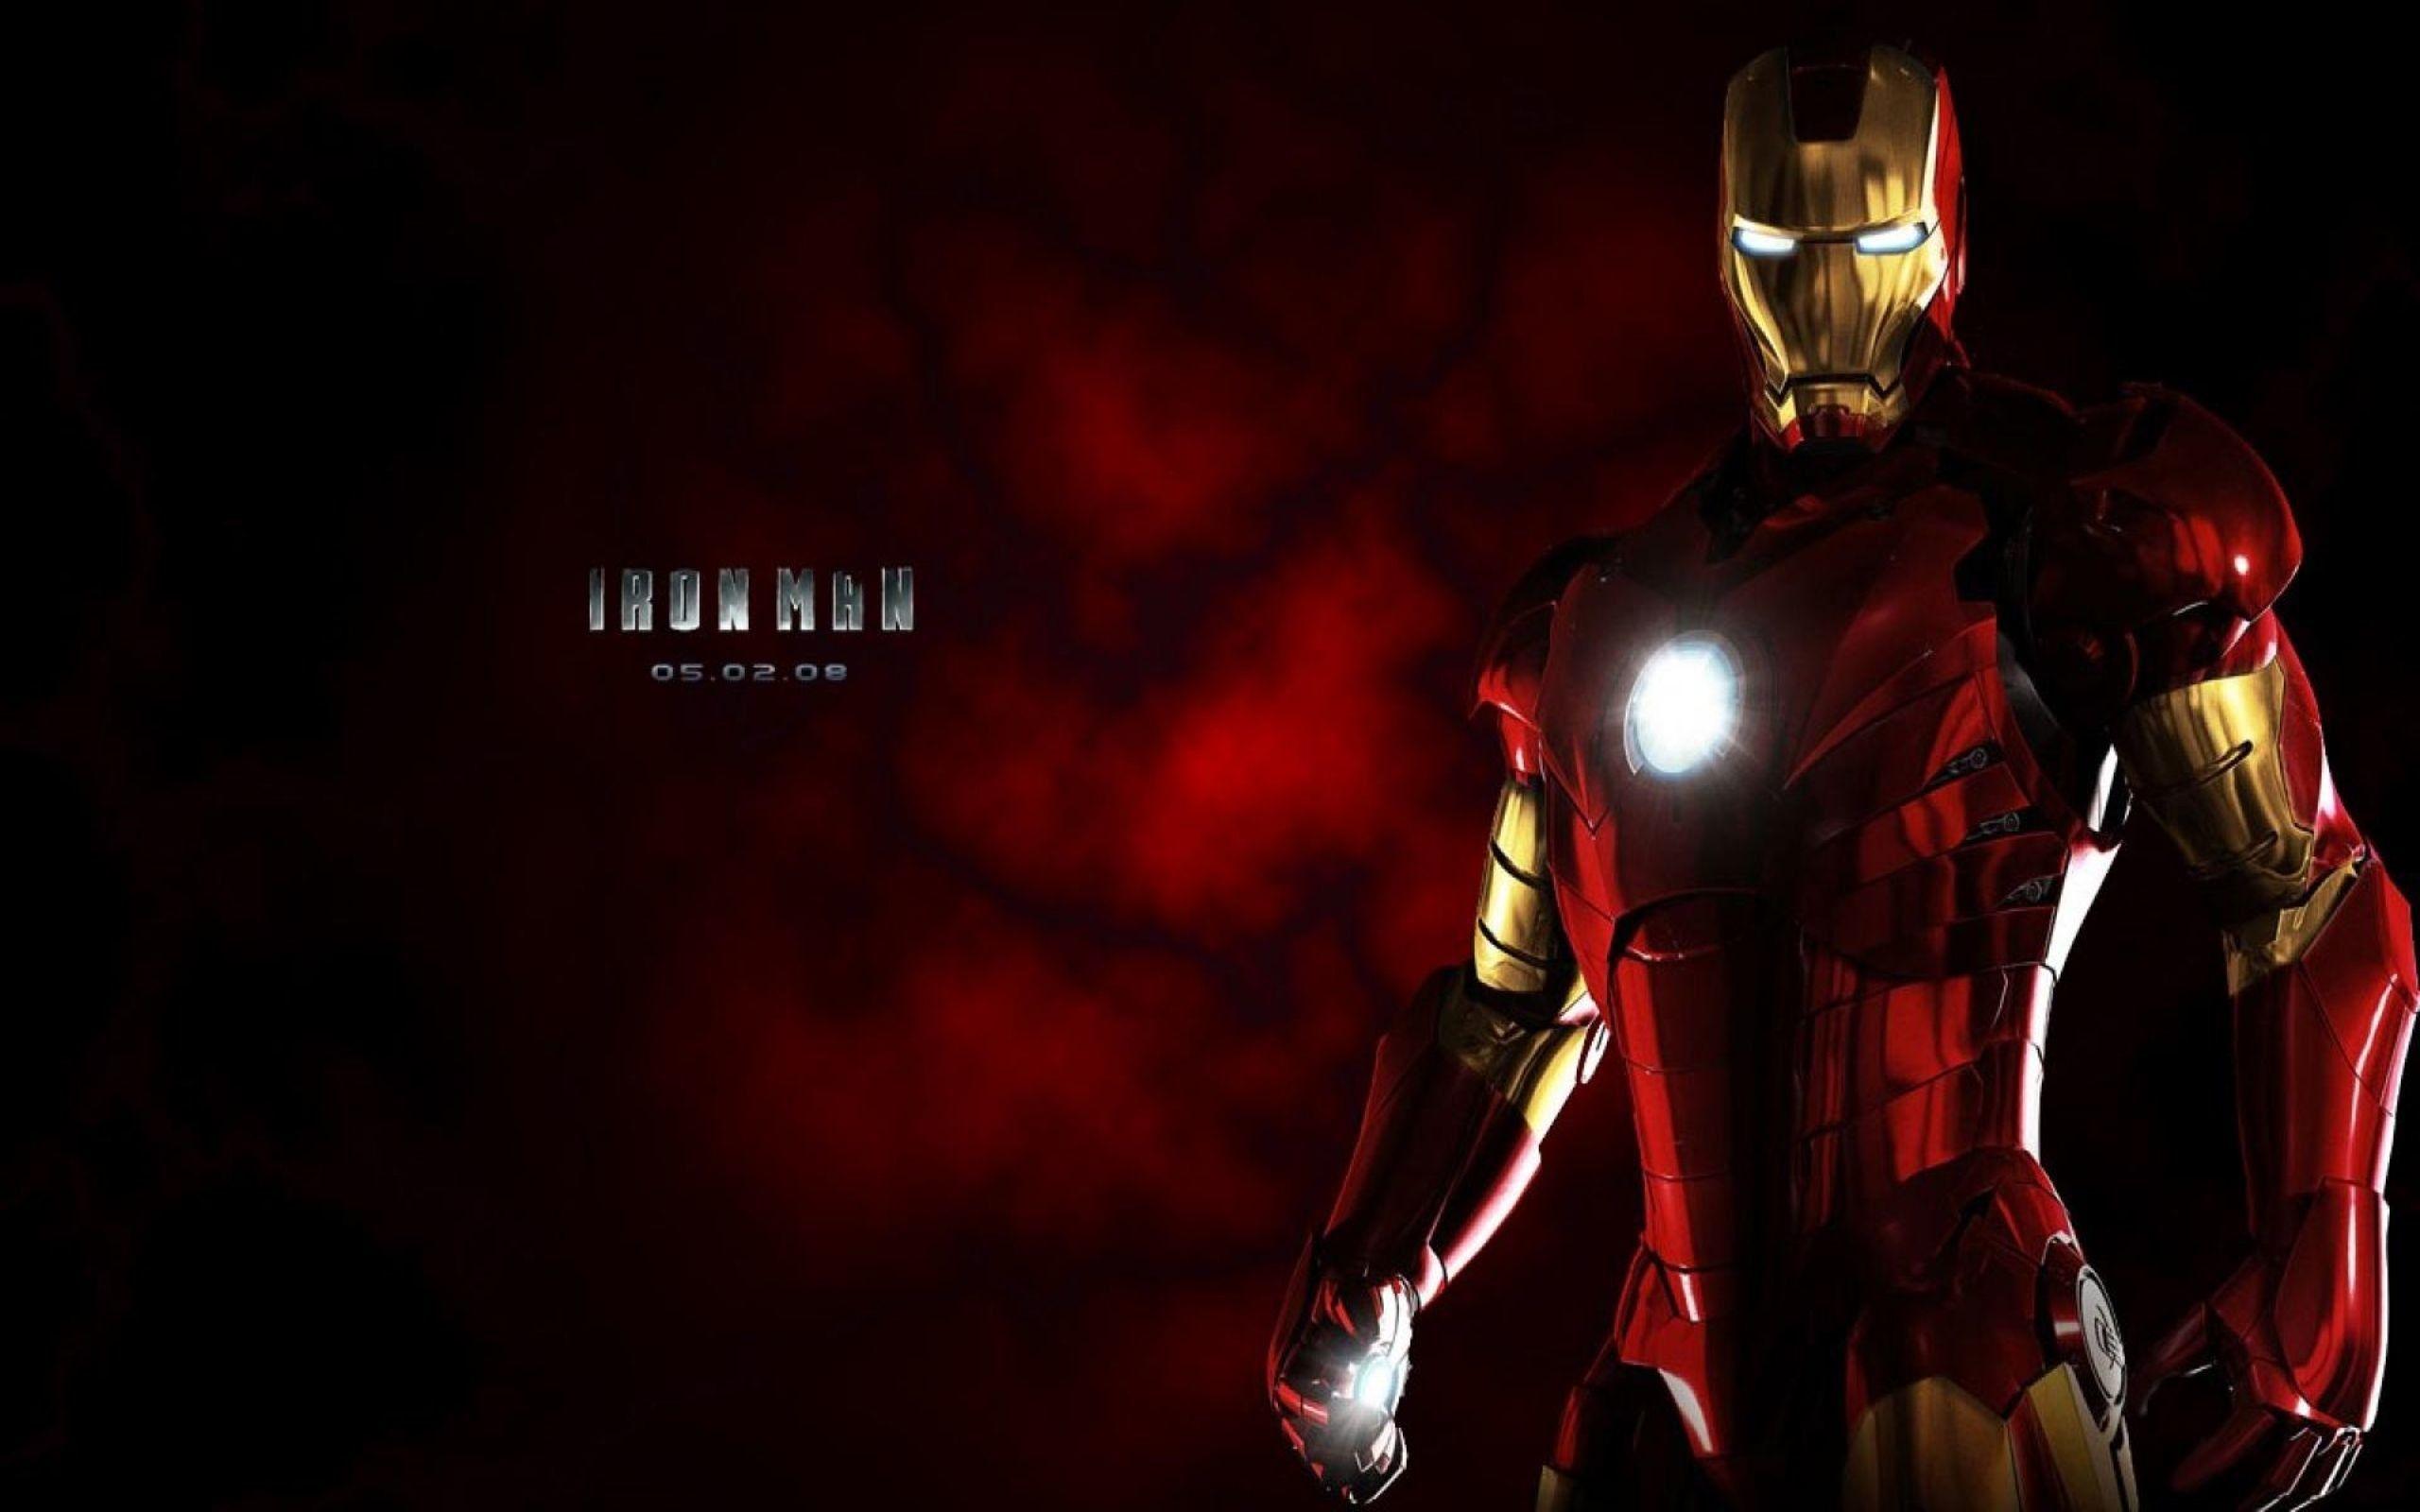 Iron Man Hd Wallpapers 1080p Wallpaper Cave